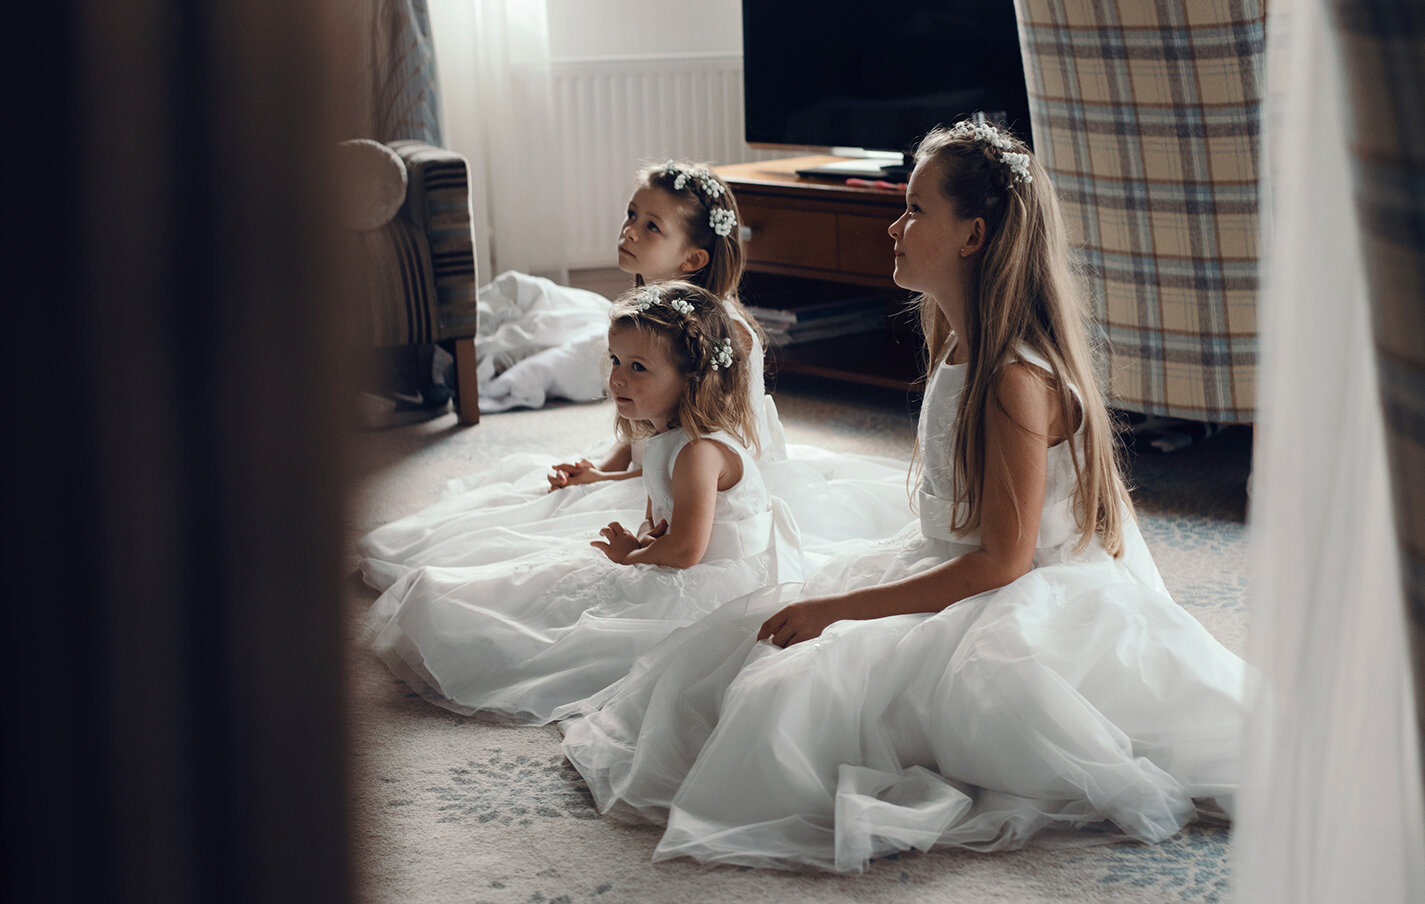 The three flower girls sitting on the floor admiring the wedding dress